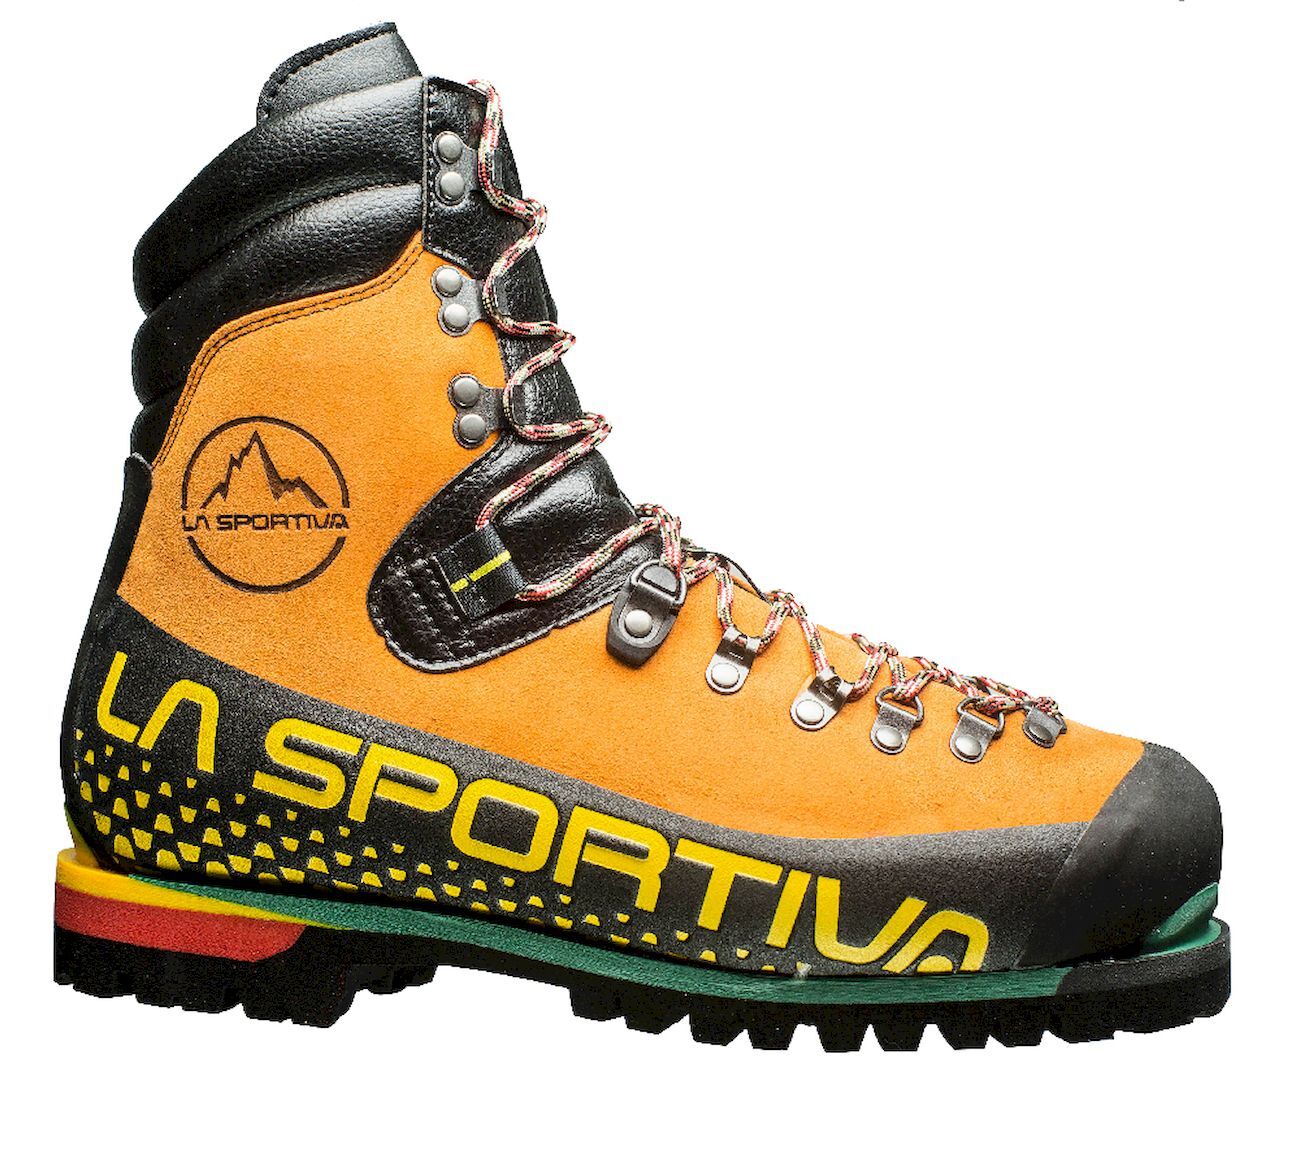 La Sportiva Nepal Extreme Work - Boots - Men's